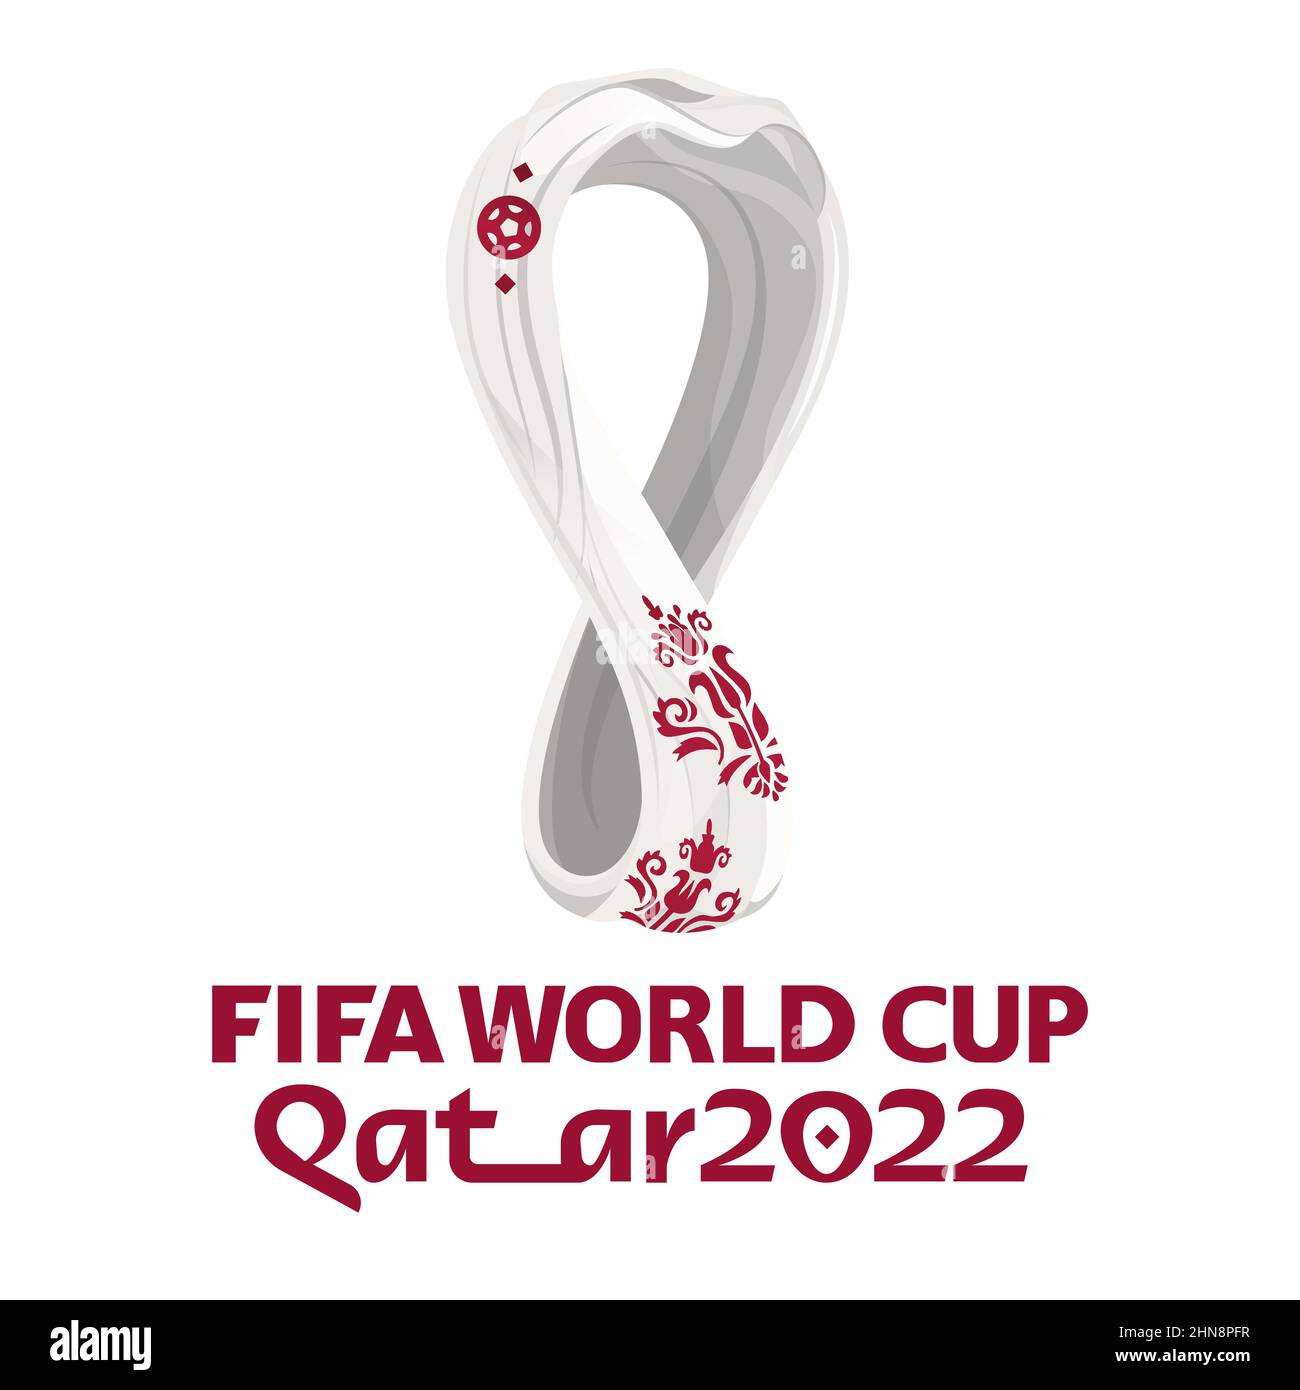 Vinnytsia, Ukraine - February 14, 2022: 2022 FIFA WORLD CUP LOGO. Editorial Illustration Stock Vector